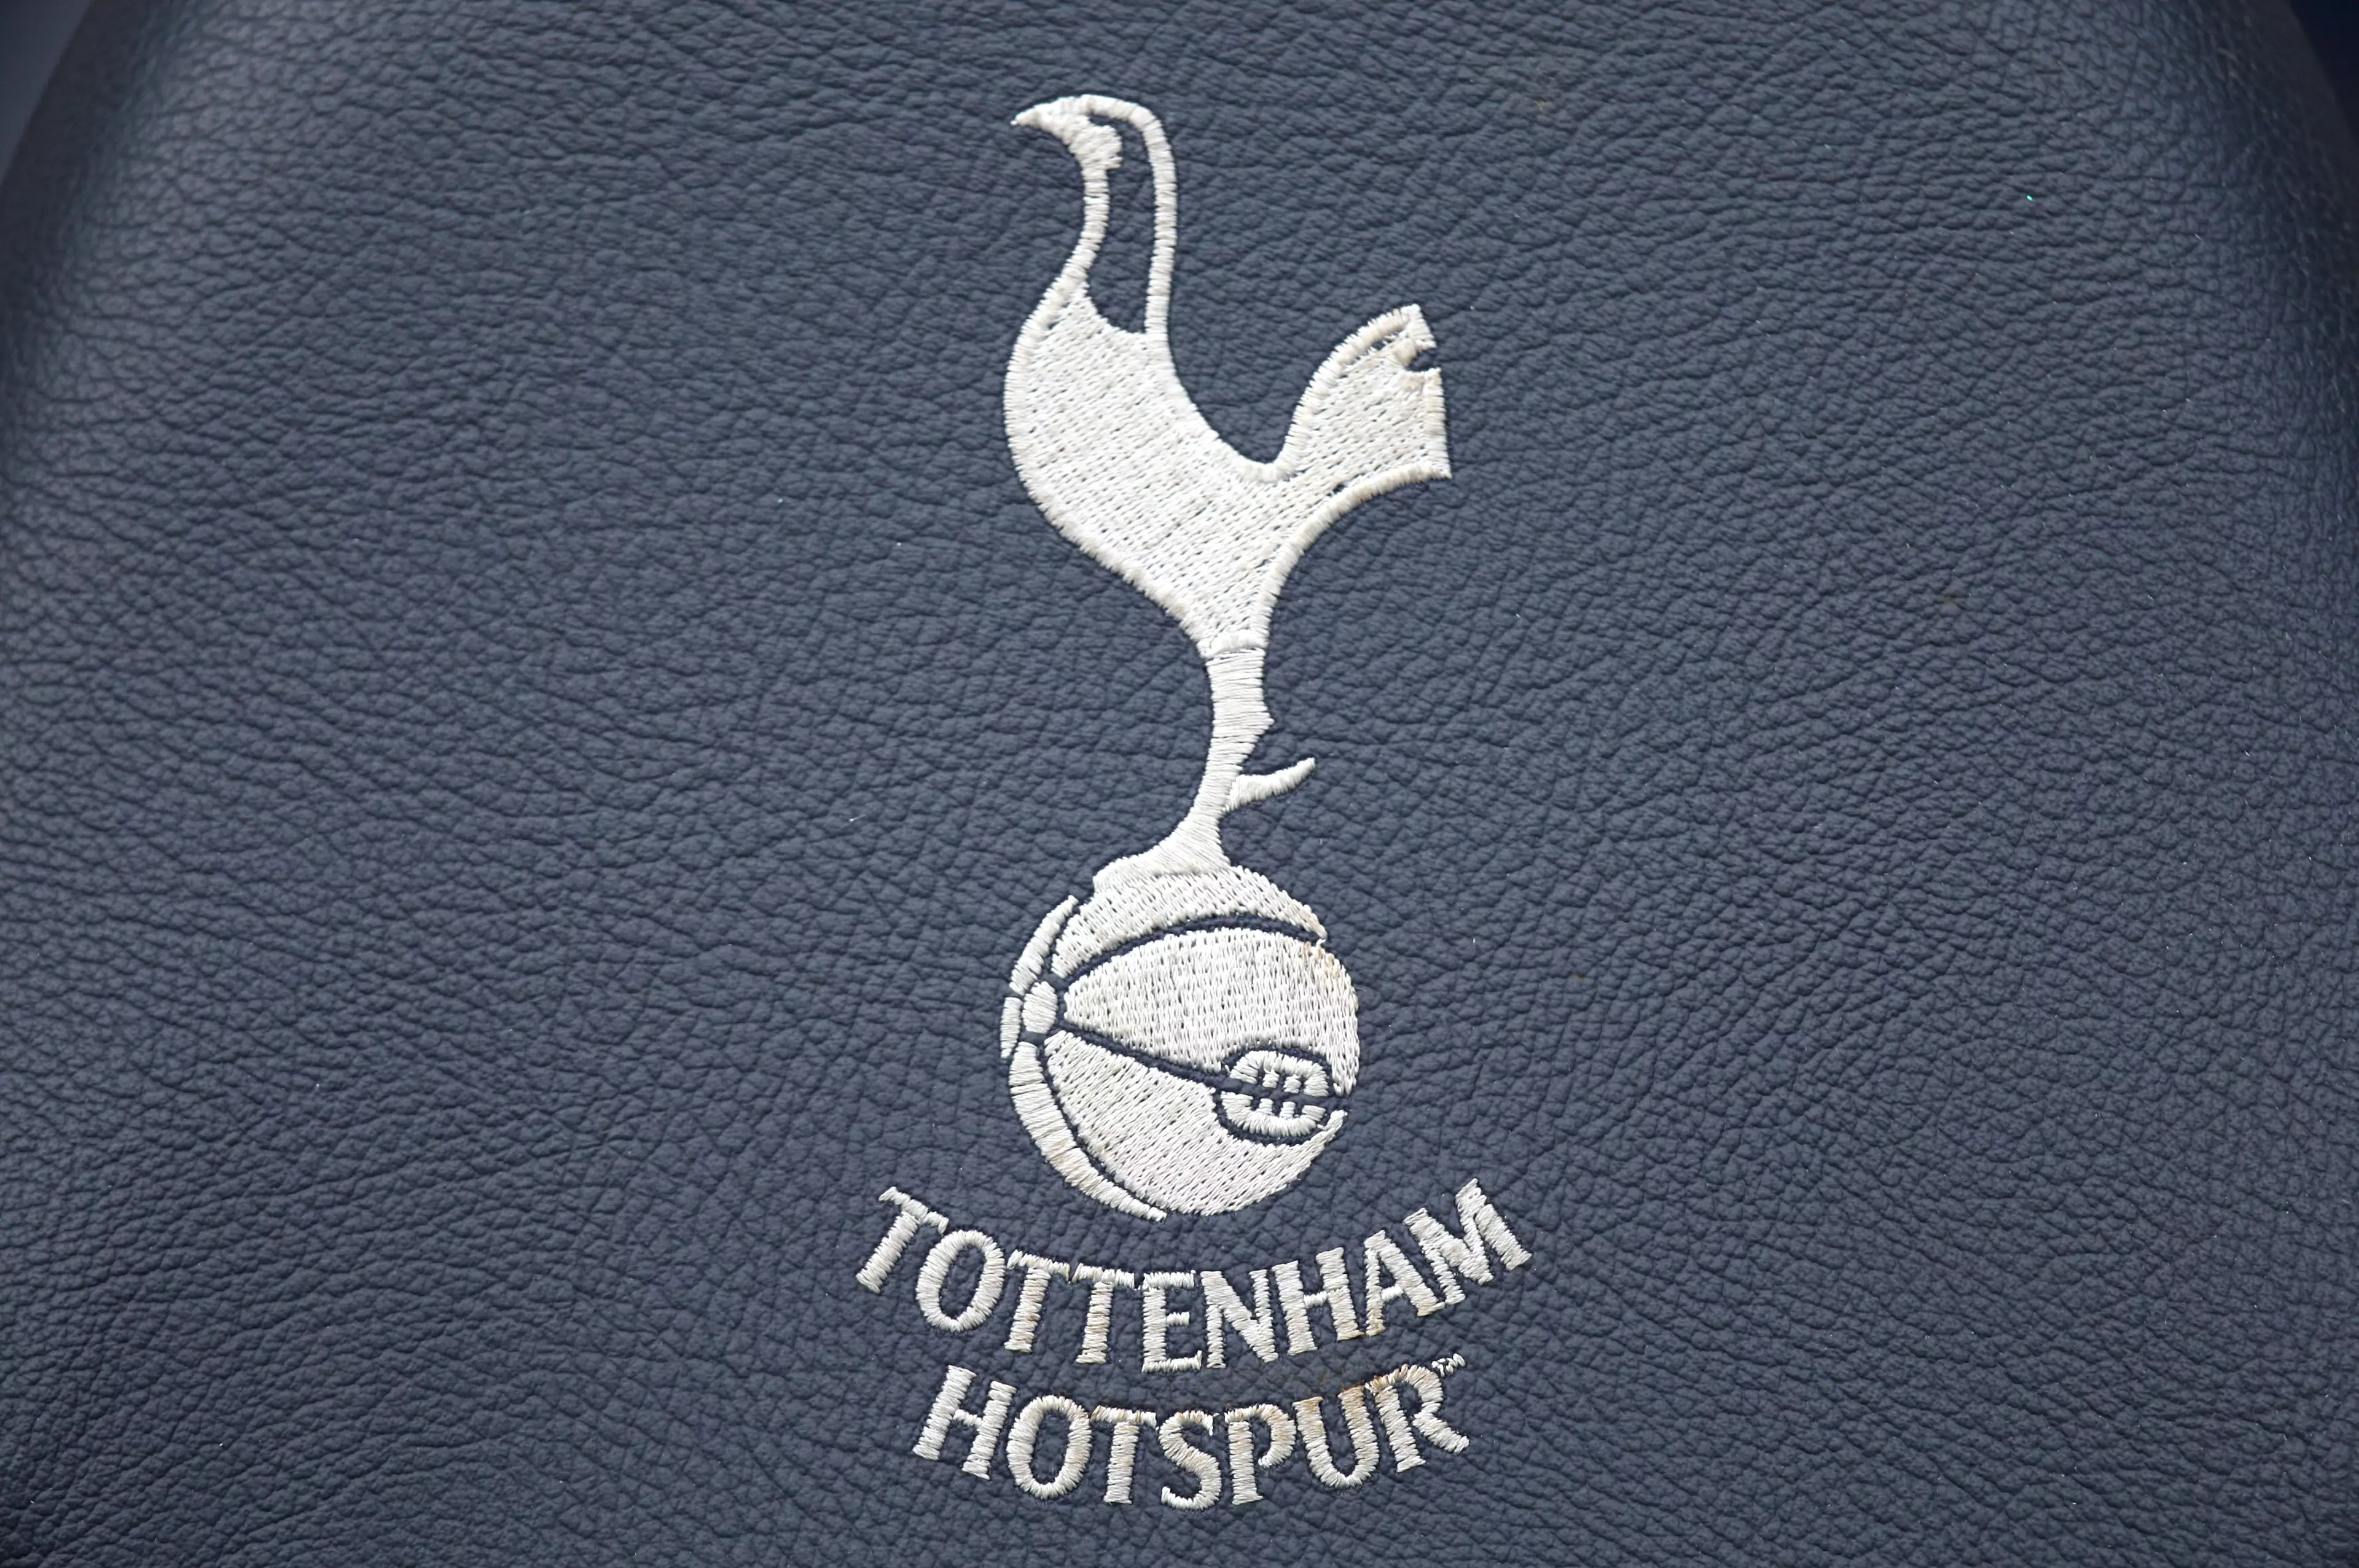 Concept Nike Kits For Tottenham Next Season Are Very Smart